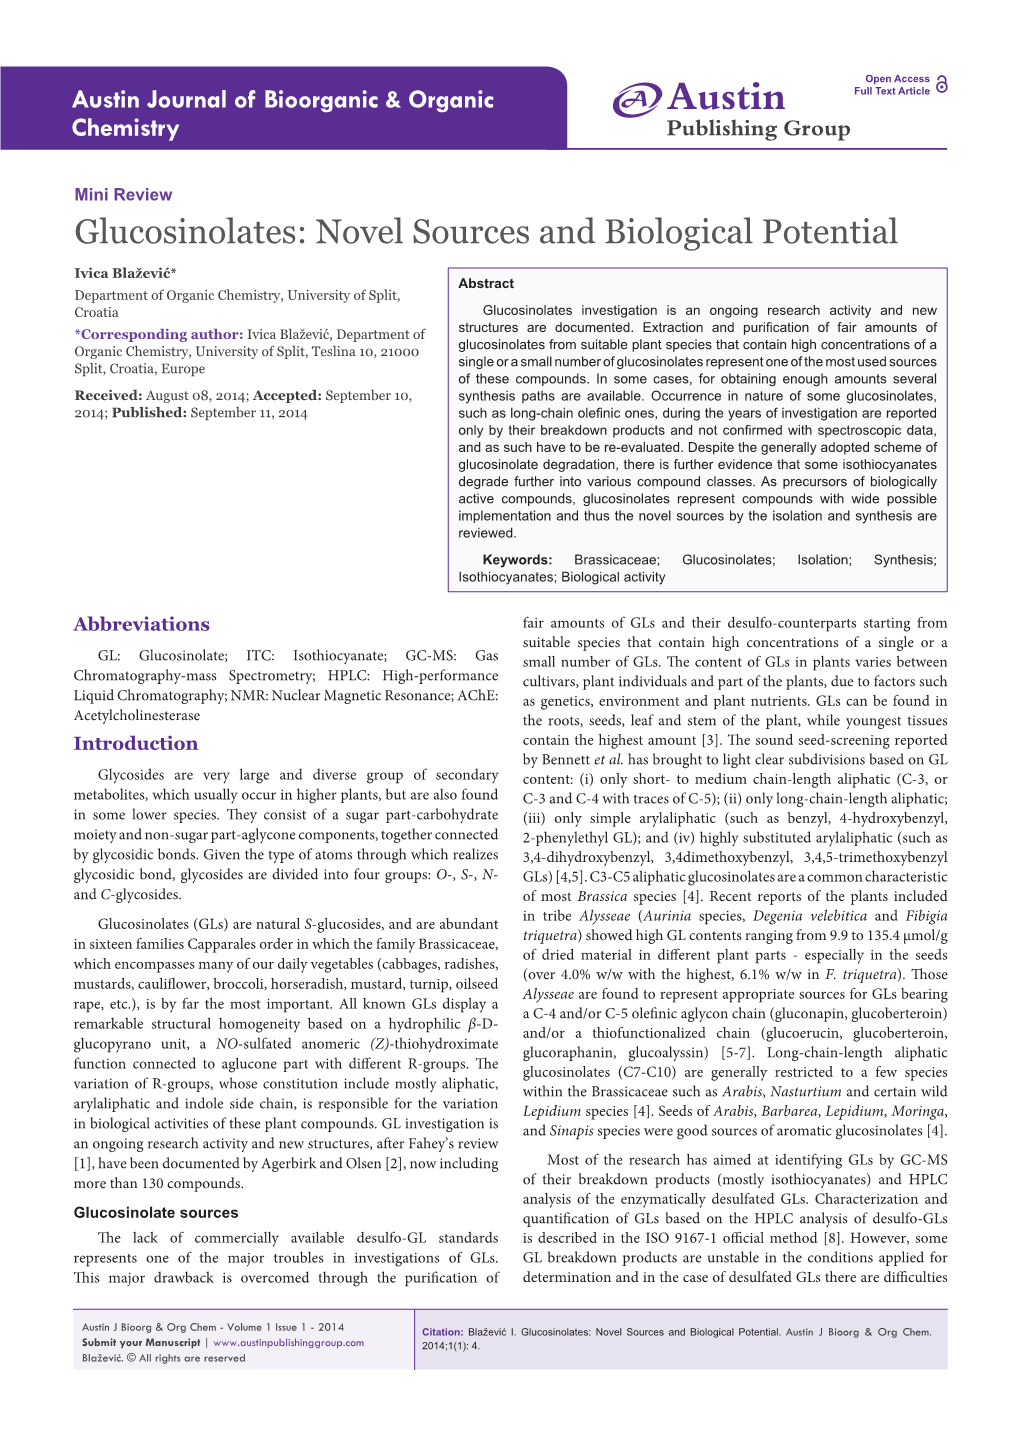 Glucosinolates: Novel Sources and Biological Potential